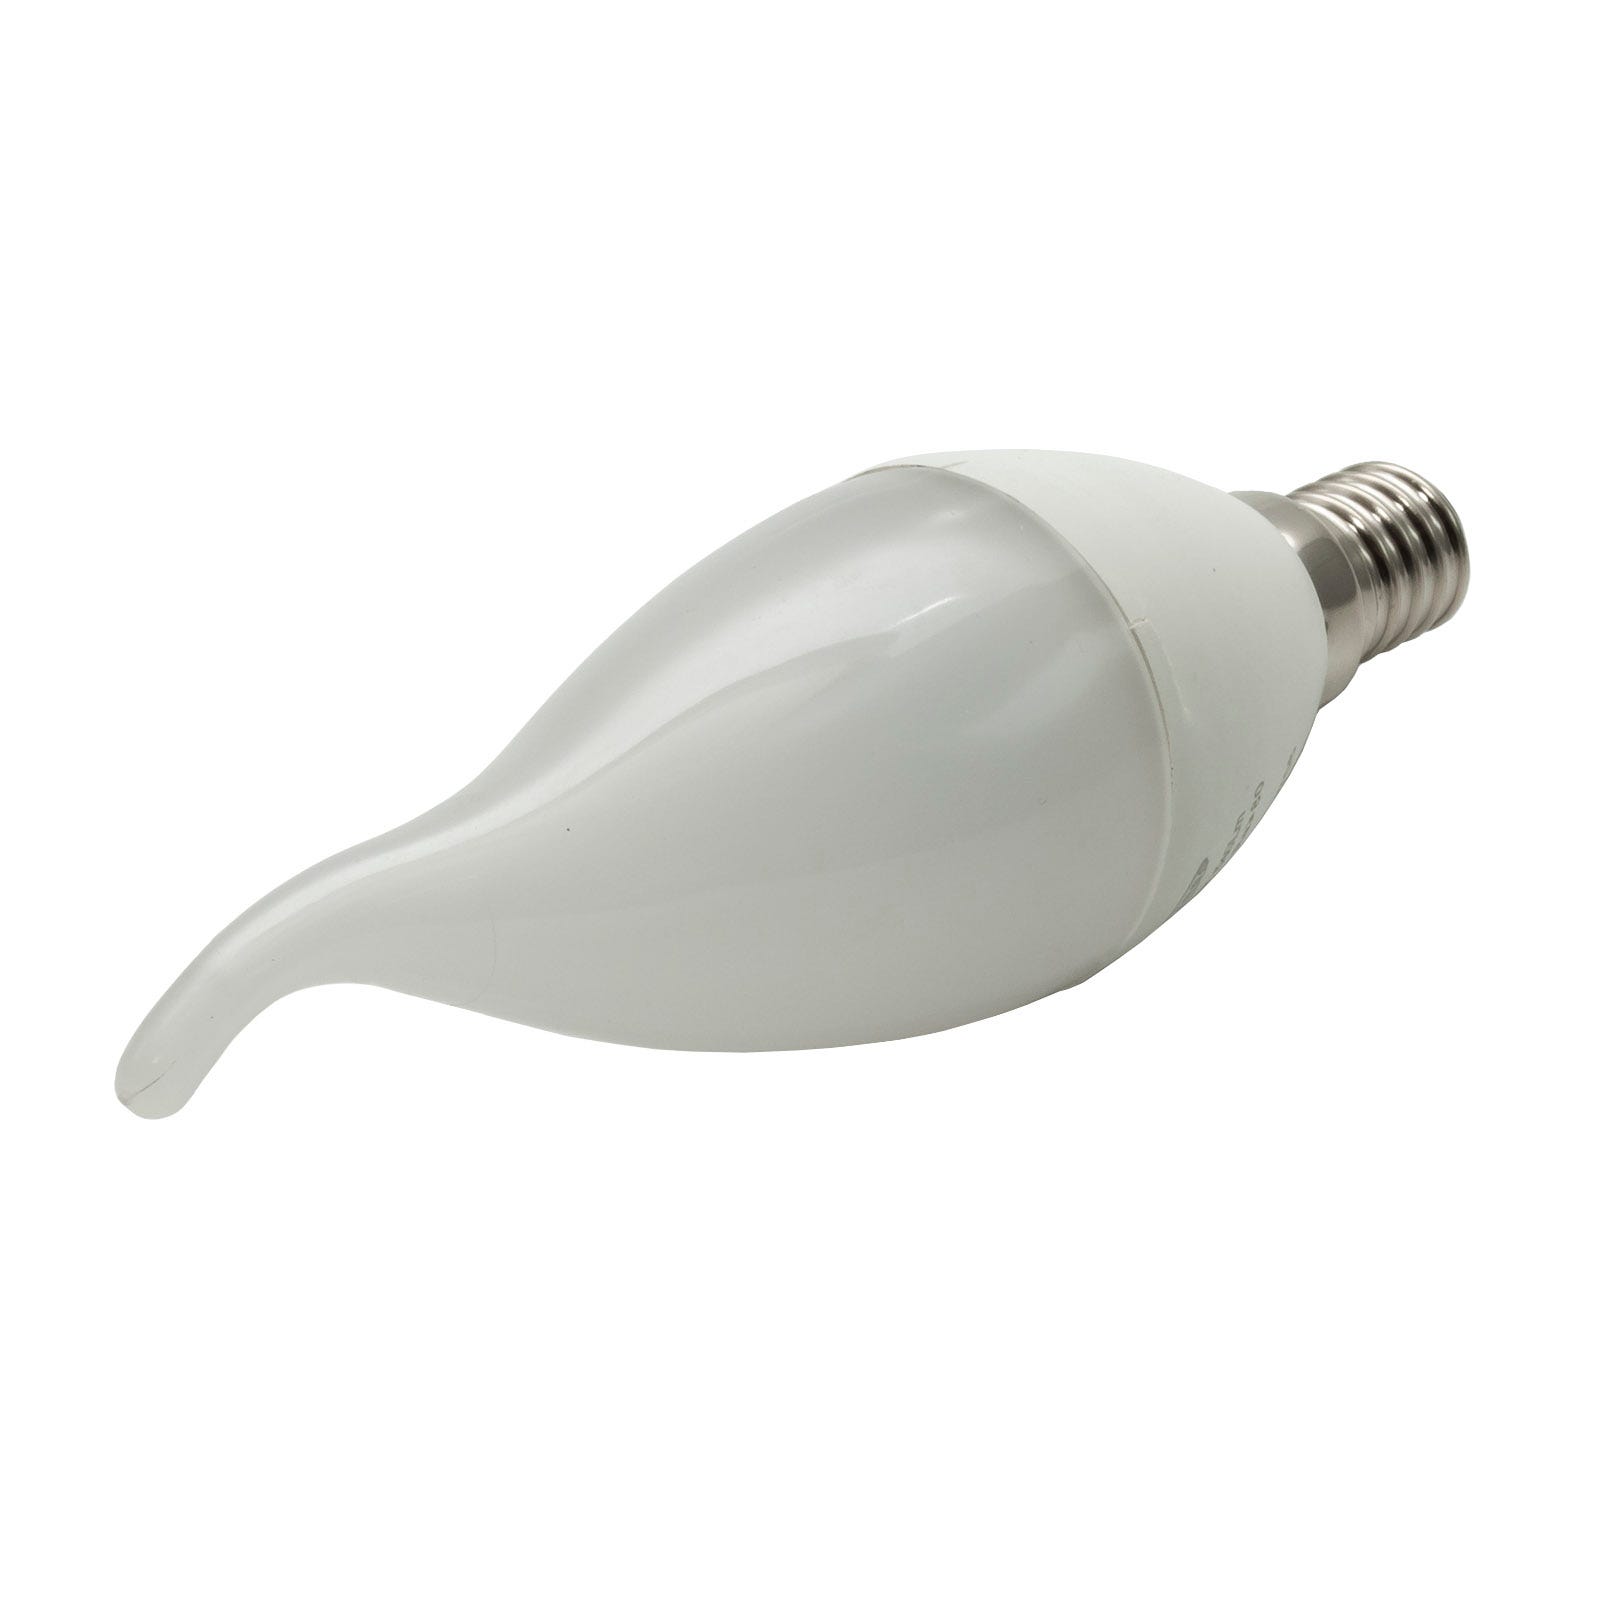 Lampadina LED E14 6W soffio di vento basso consumo lampada resa 48W 540lm  220V LUCE 6000K